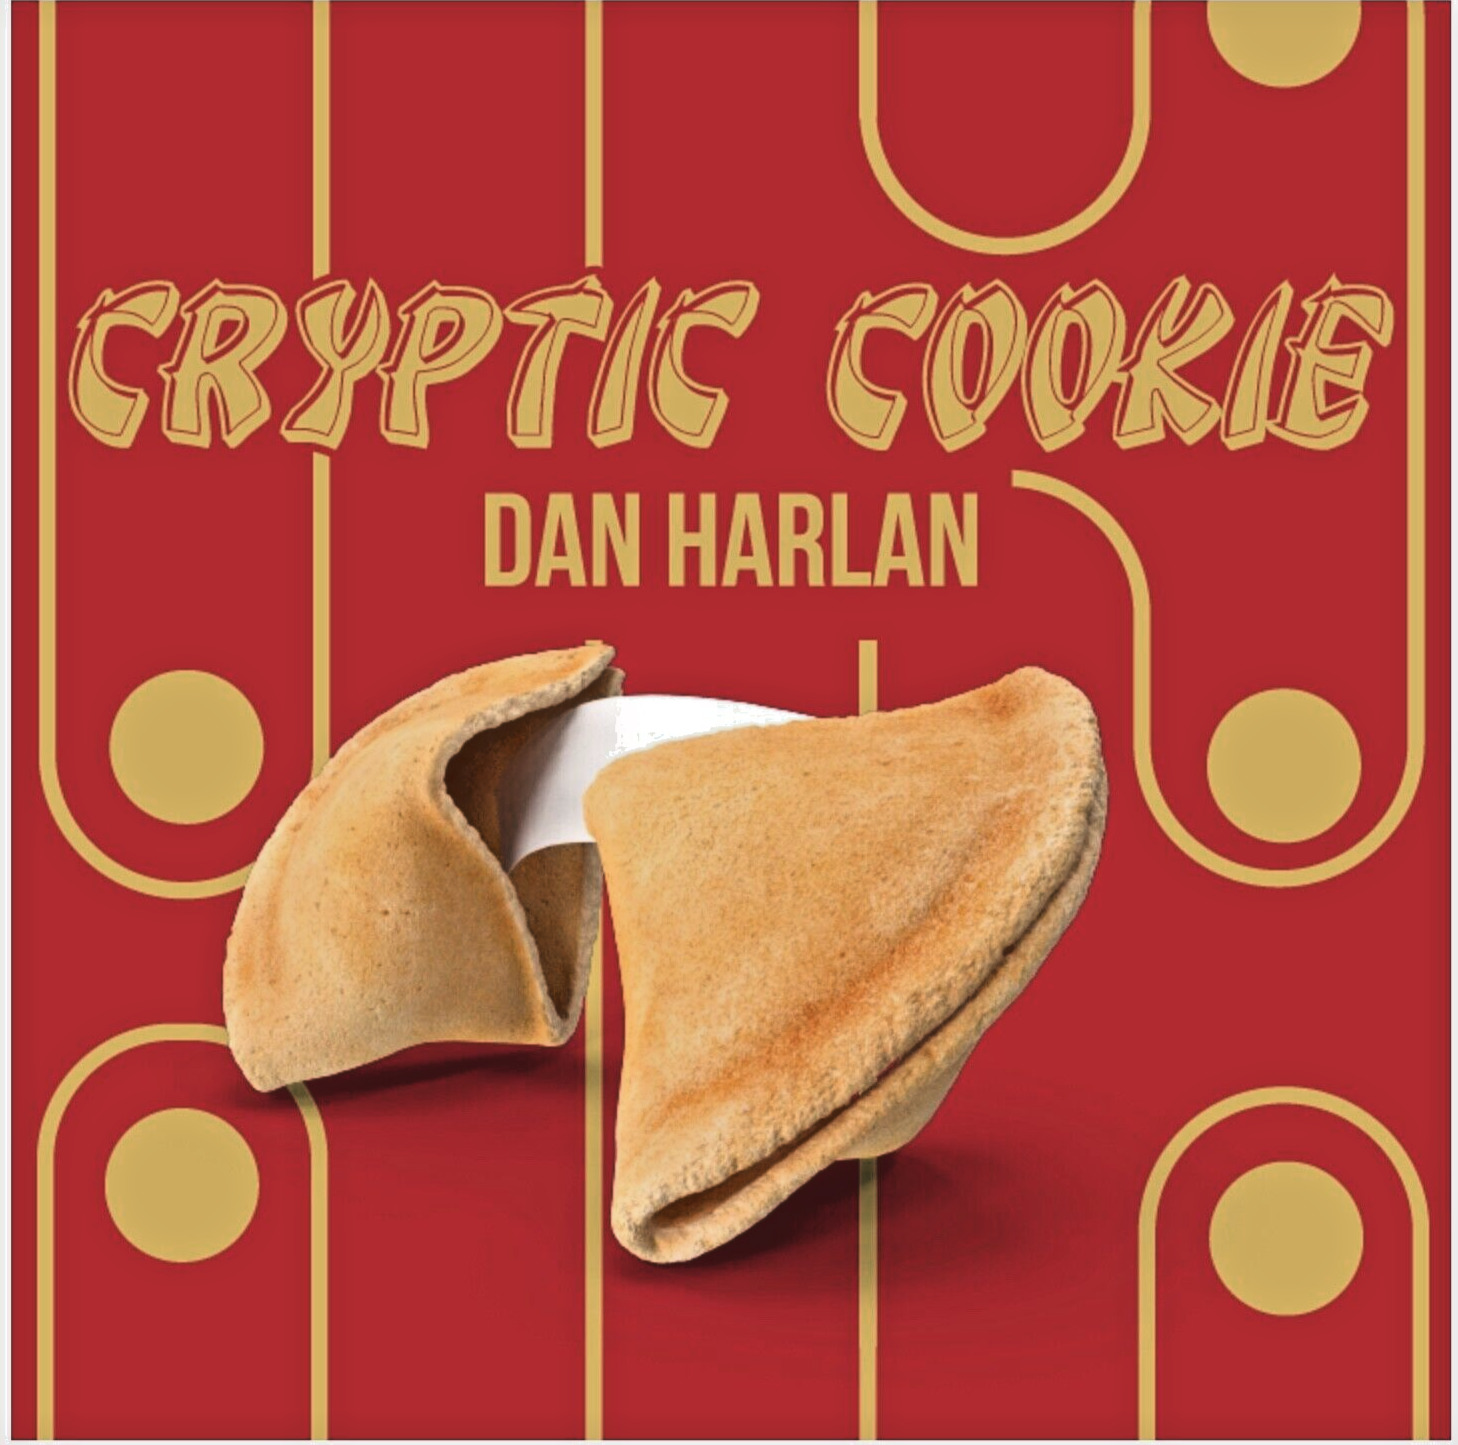 Cryptic Cookie - Dan Harlan - Card Revelation Magic Trick - Gimmicks & Ins. NEW